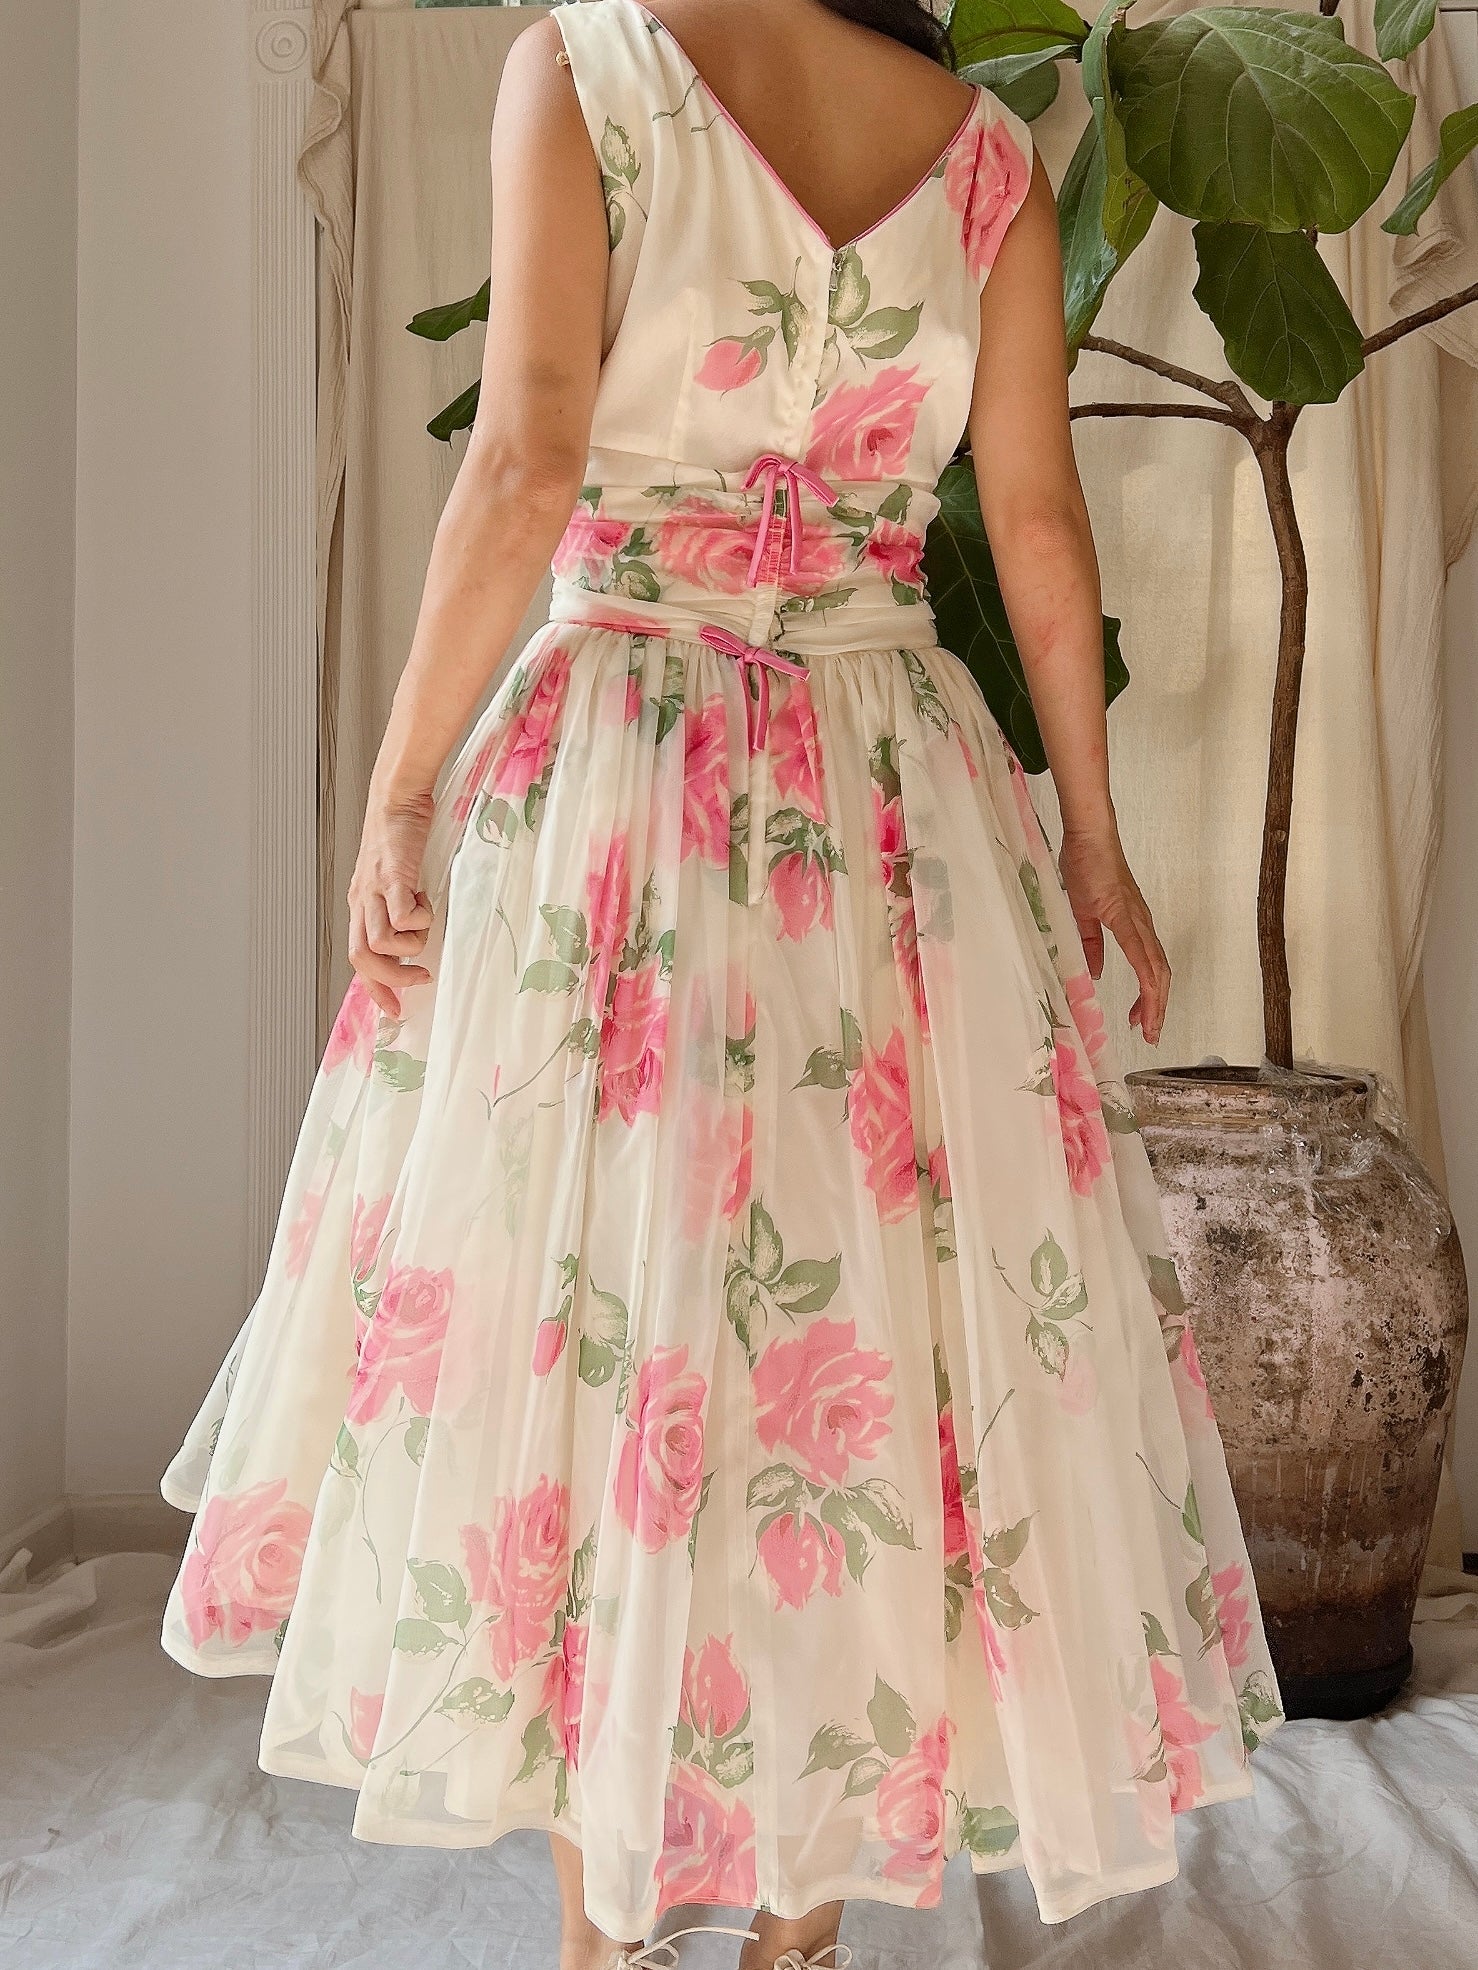 1950s Rose Print Dress - S